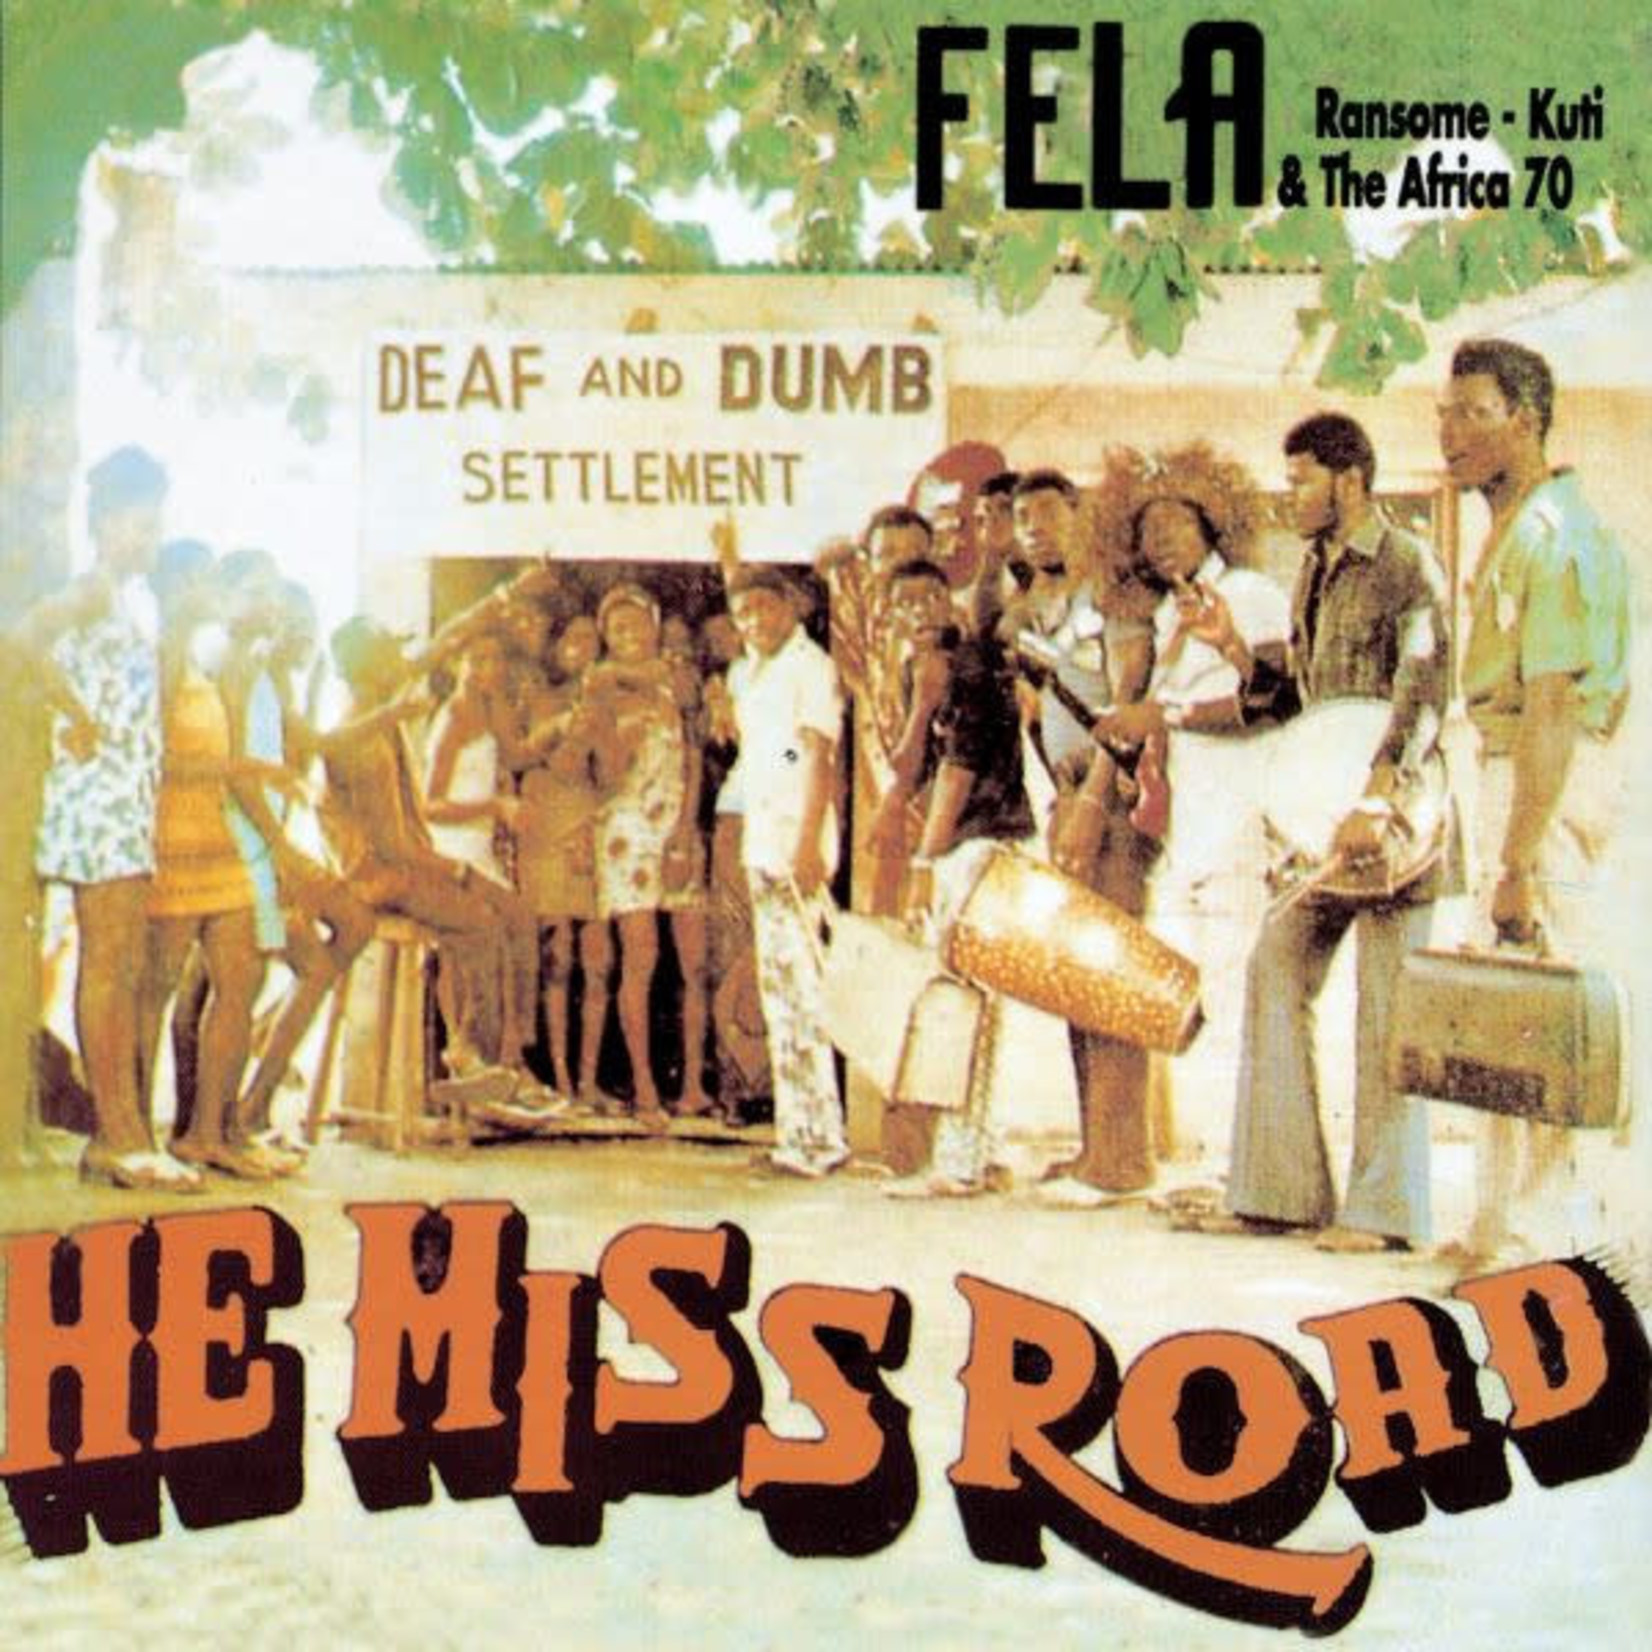 [New] Fela Kuti - He Miss Road